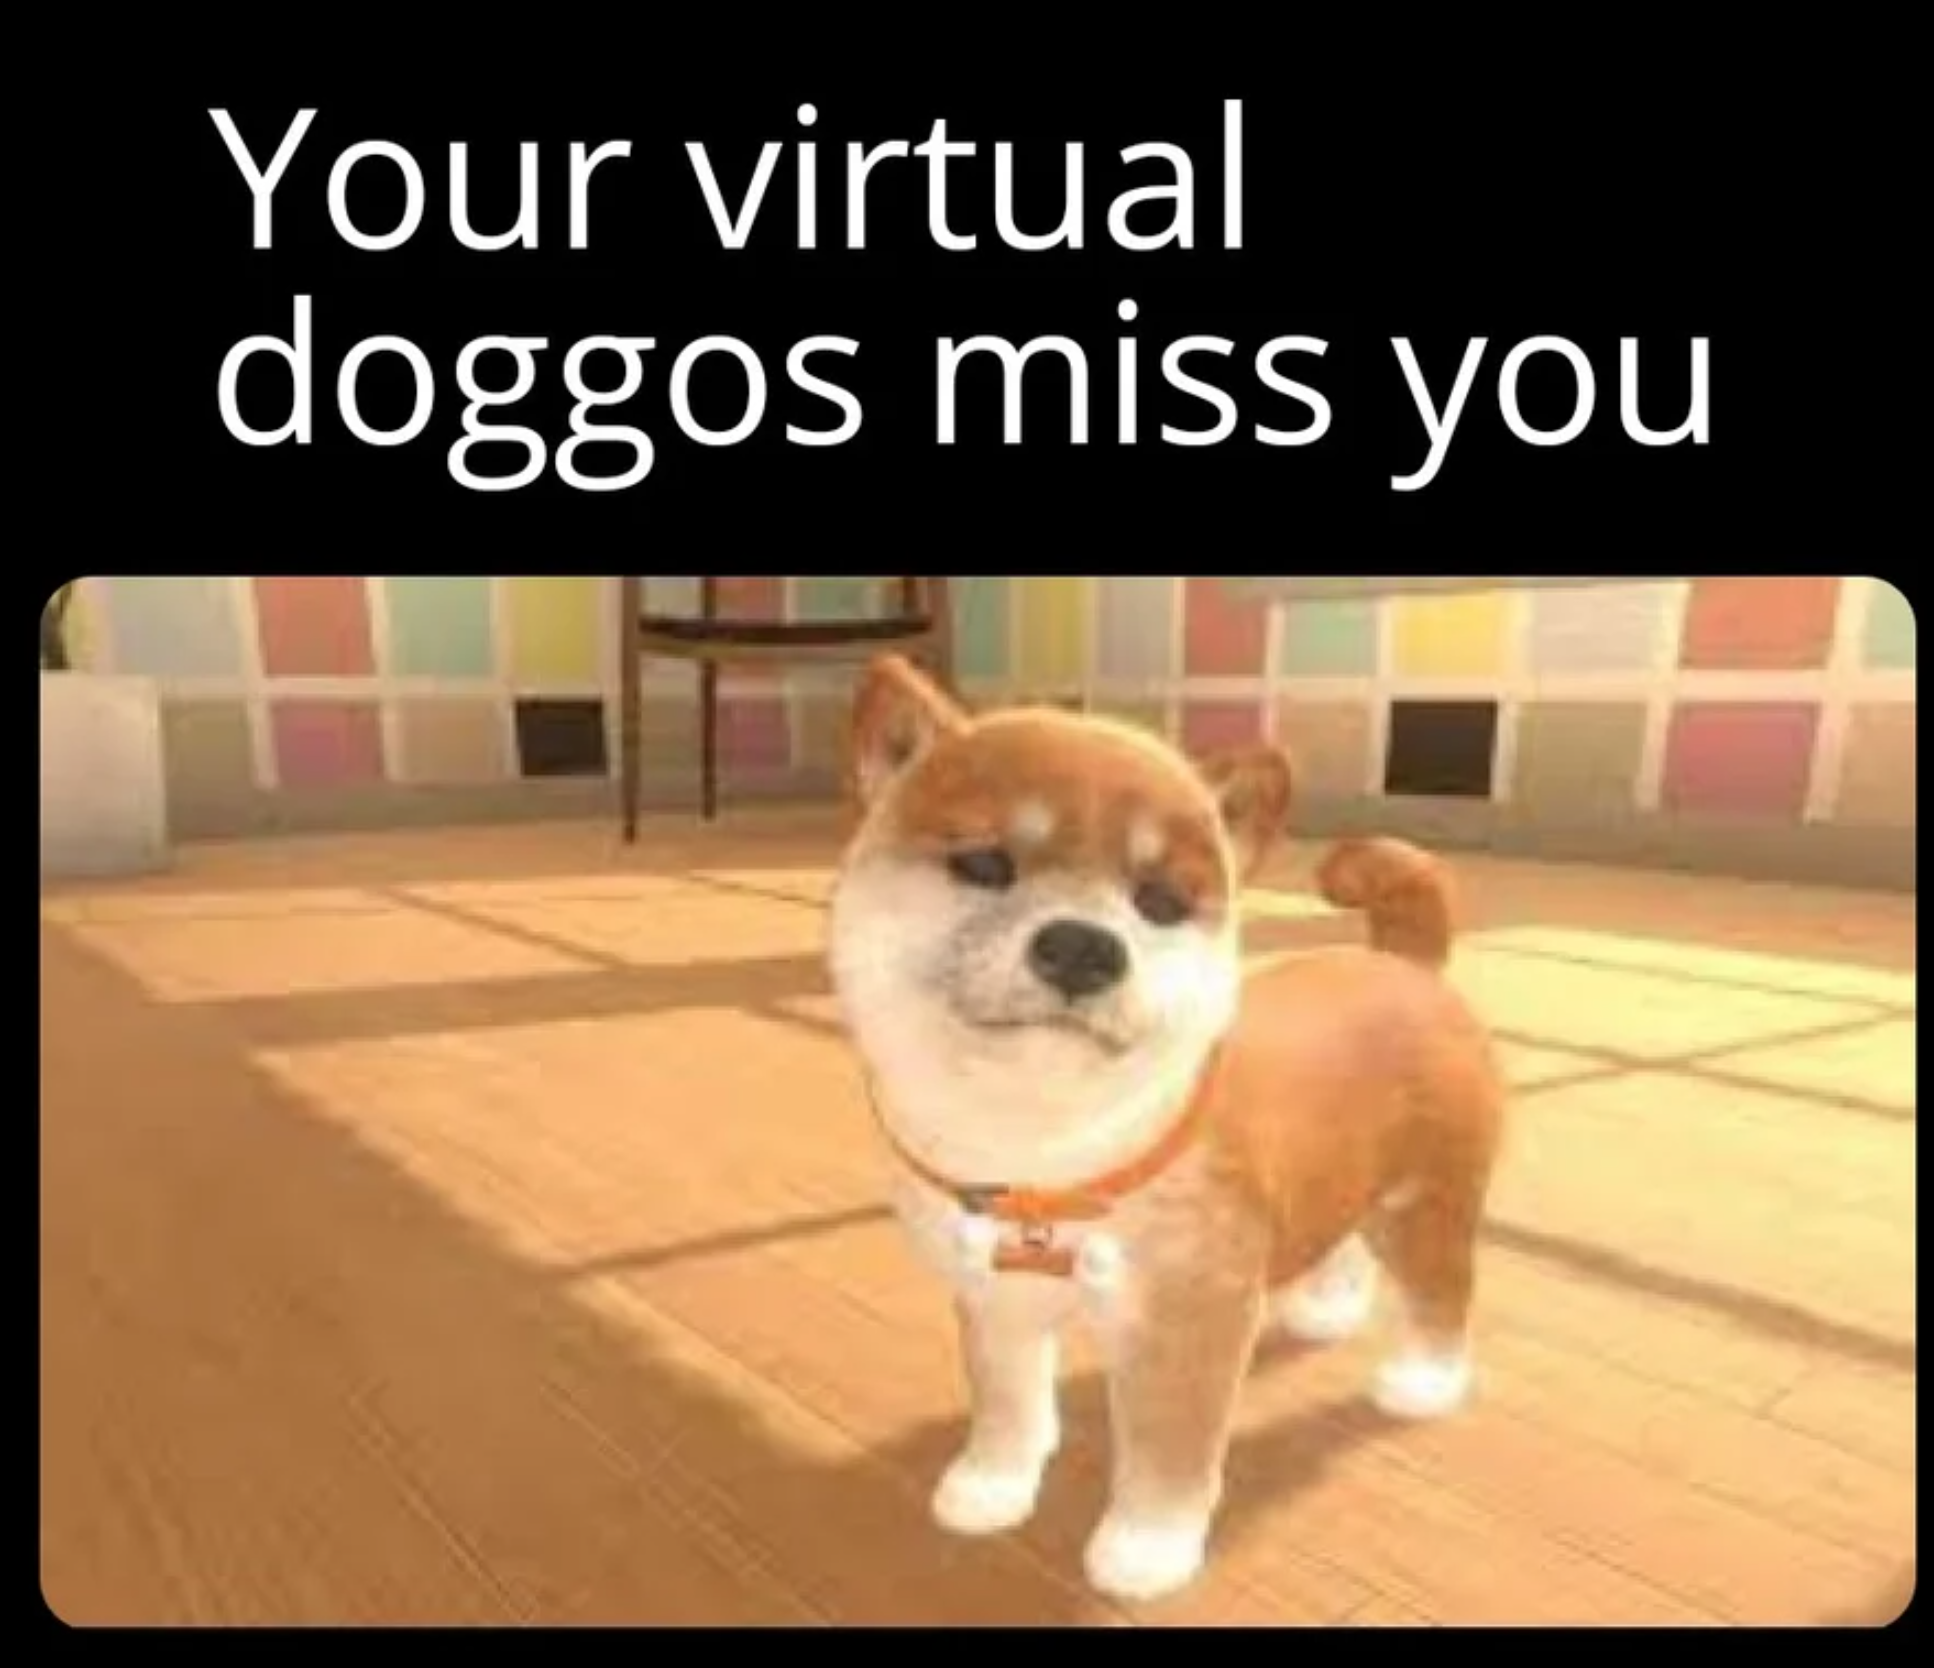 monday morning randomness - dog - Your virtual doggos miss you